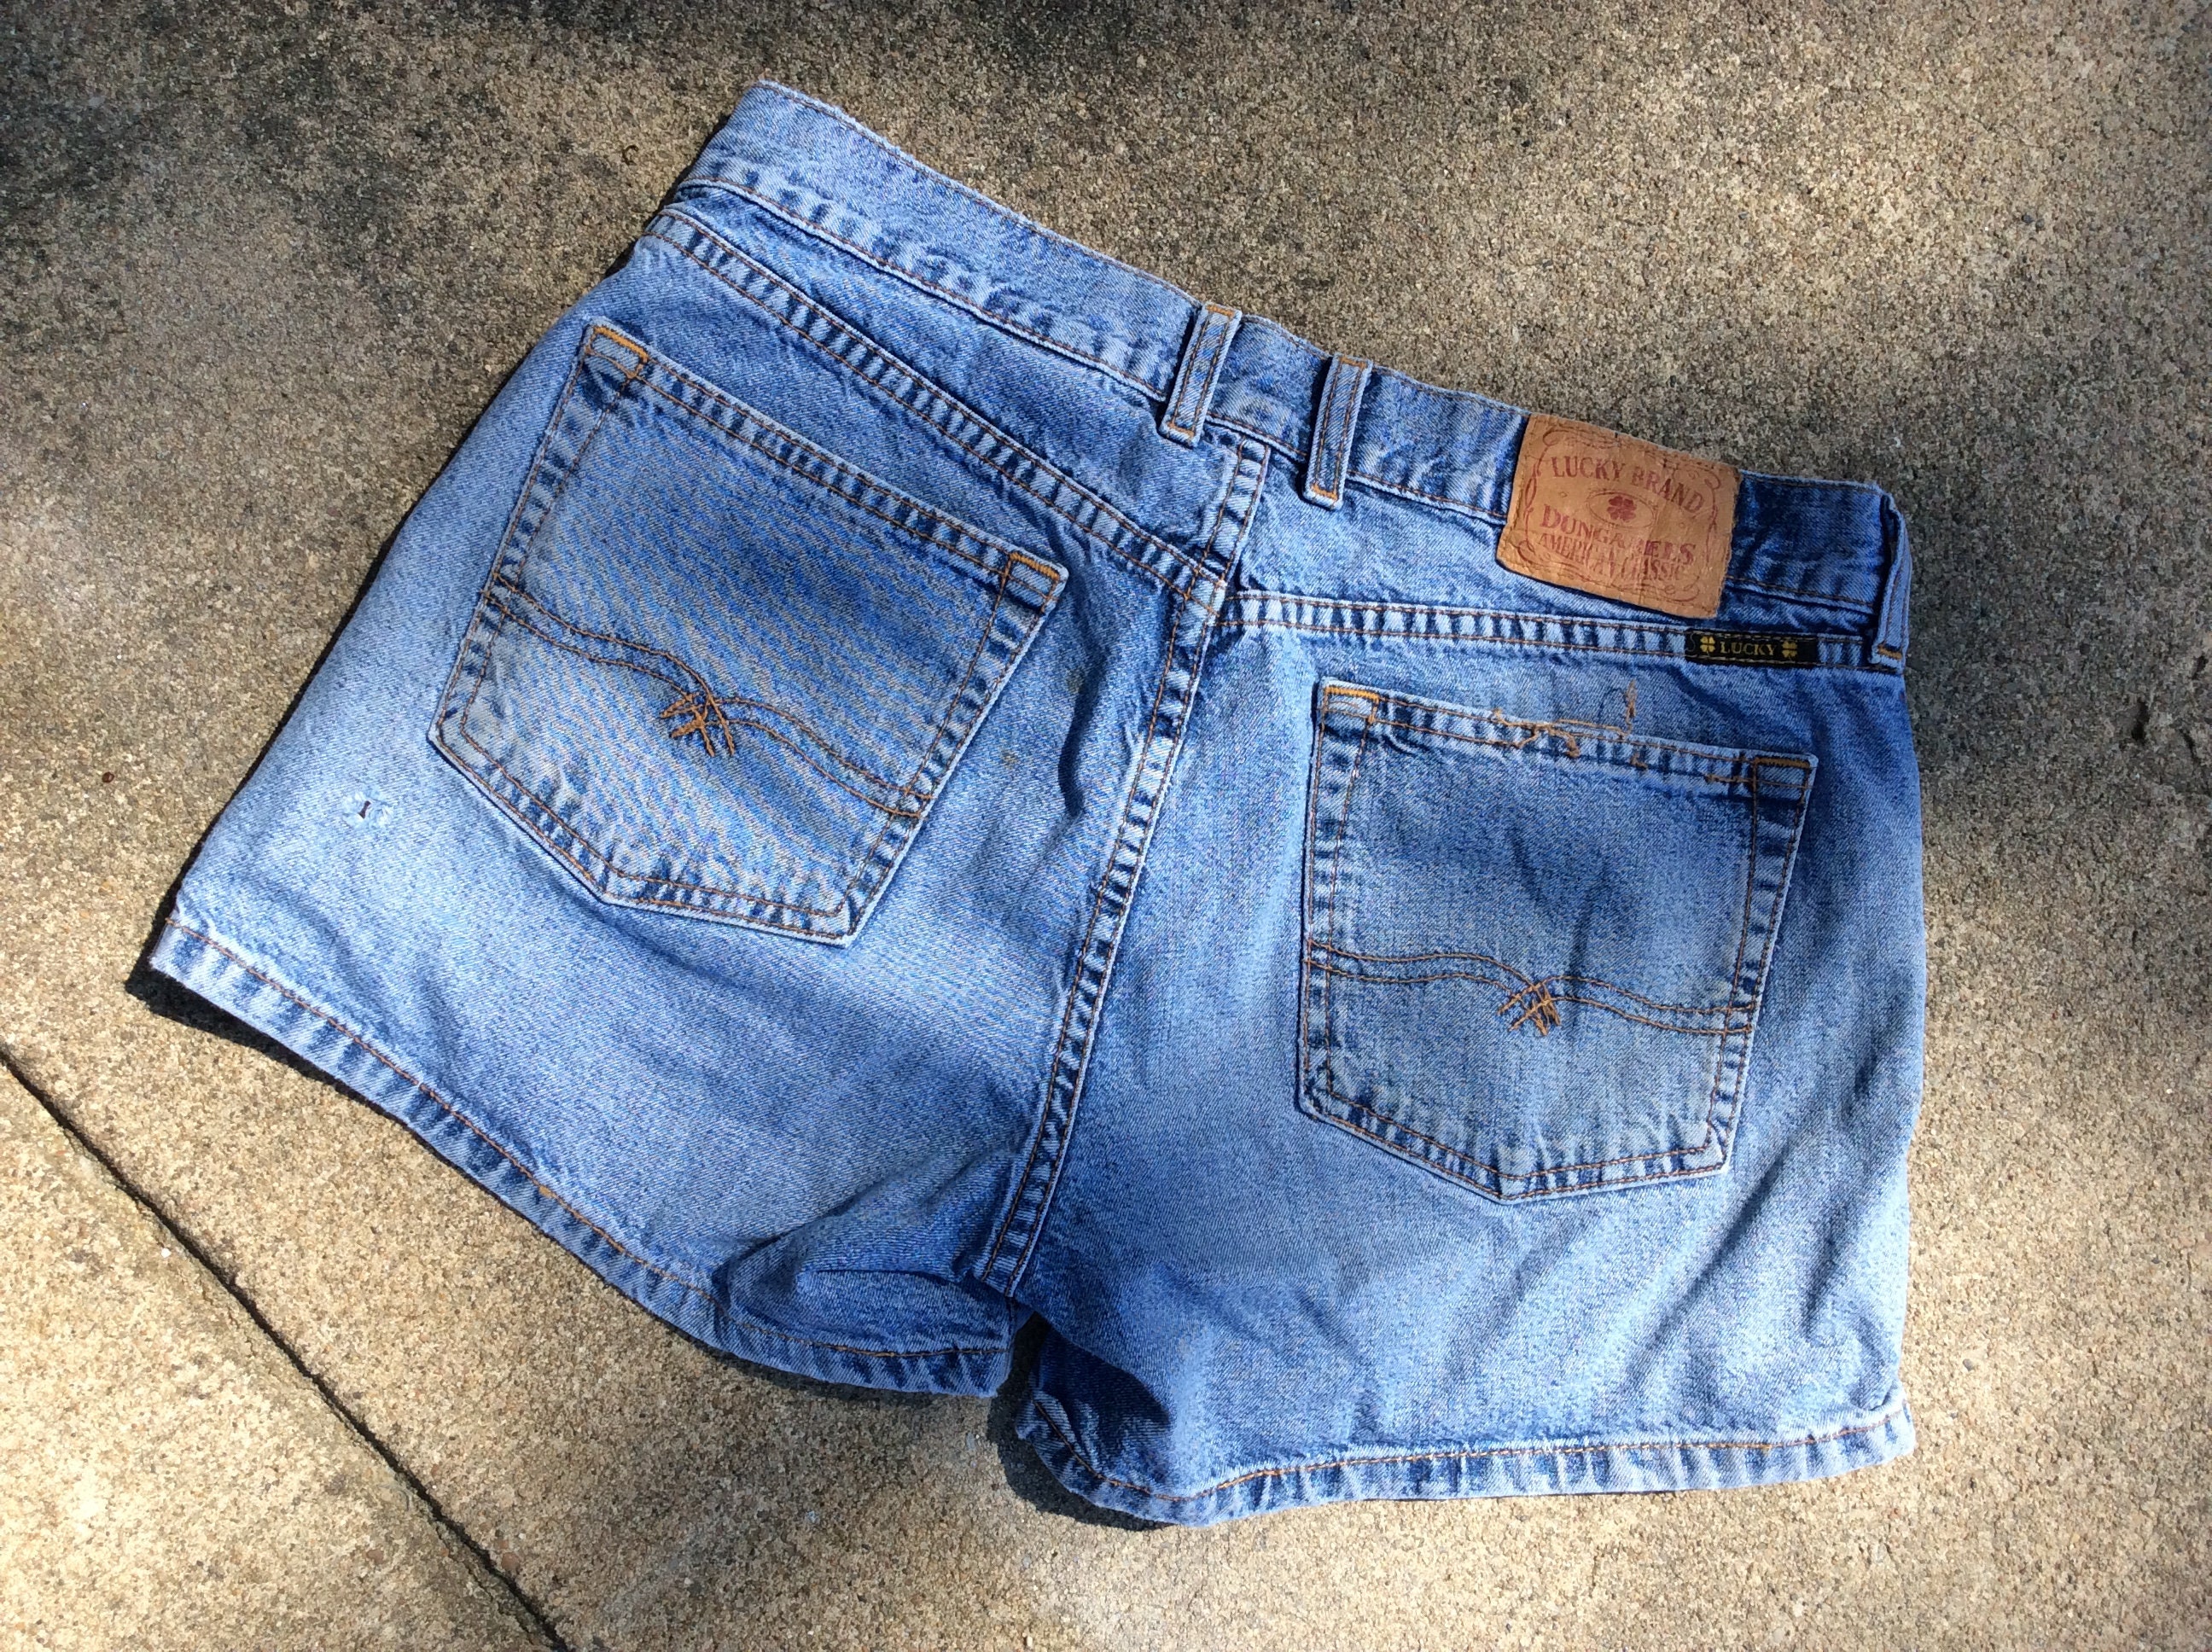 LUCKY BRAND Dungarees Jeans Womens Vintage Denim (8/28) waist 28 inseam 31